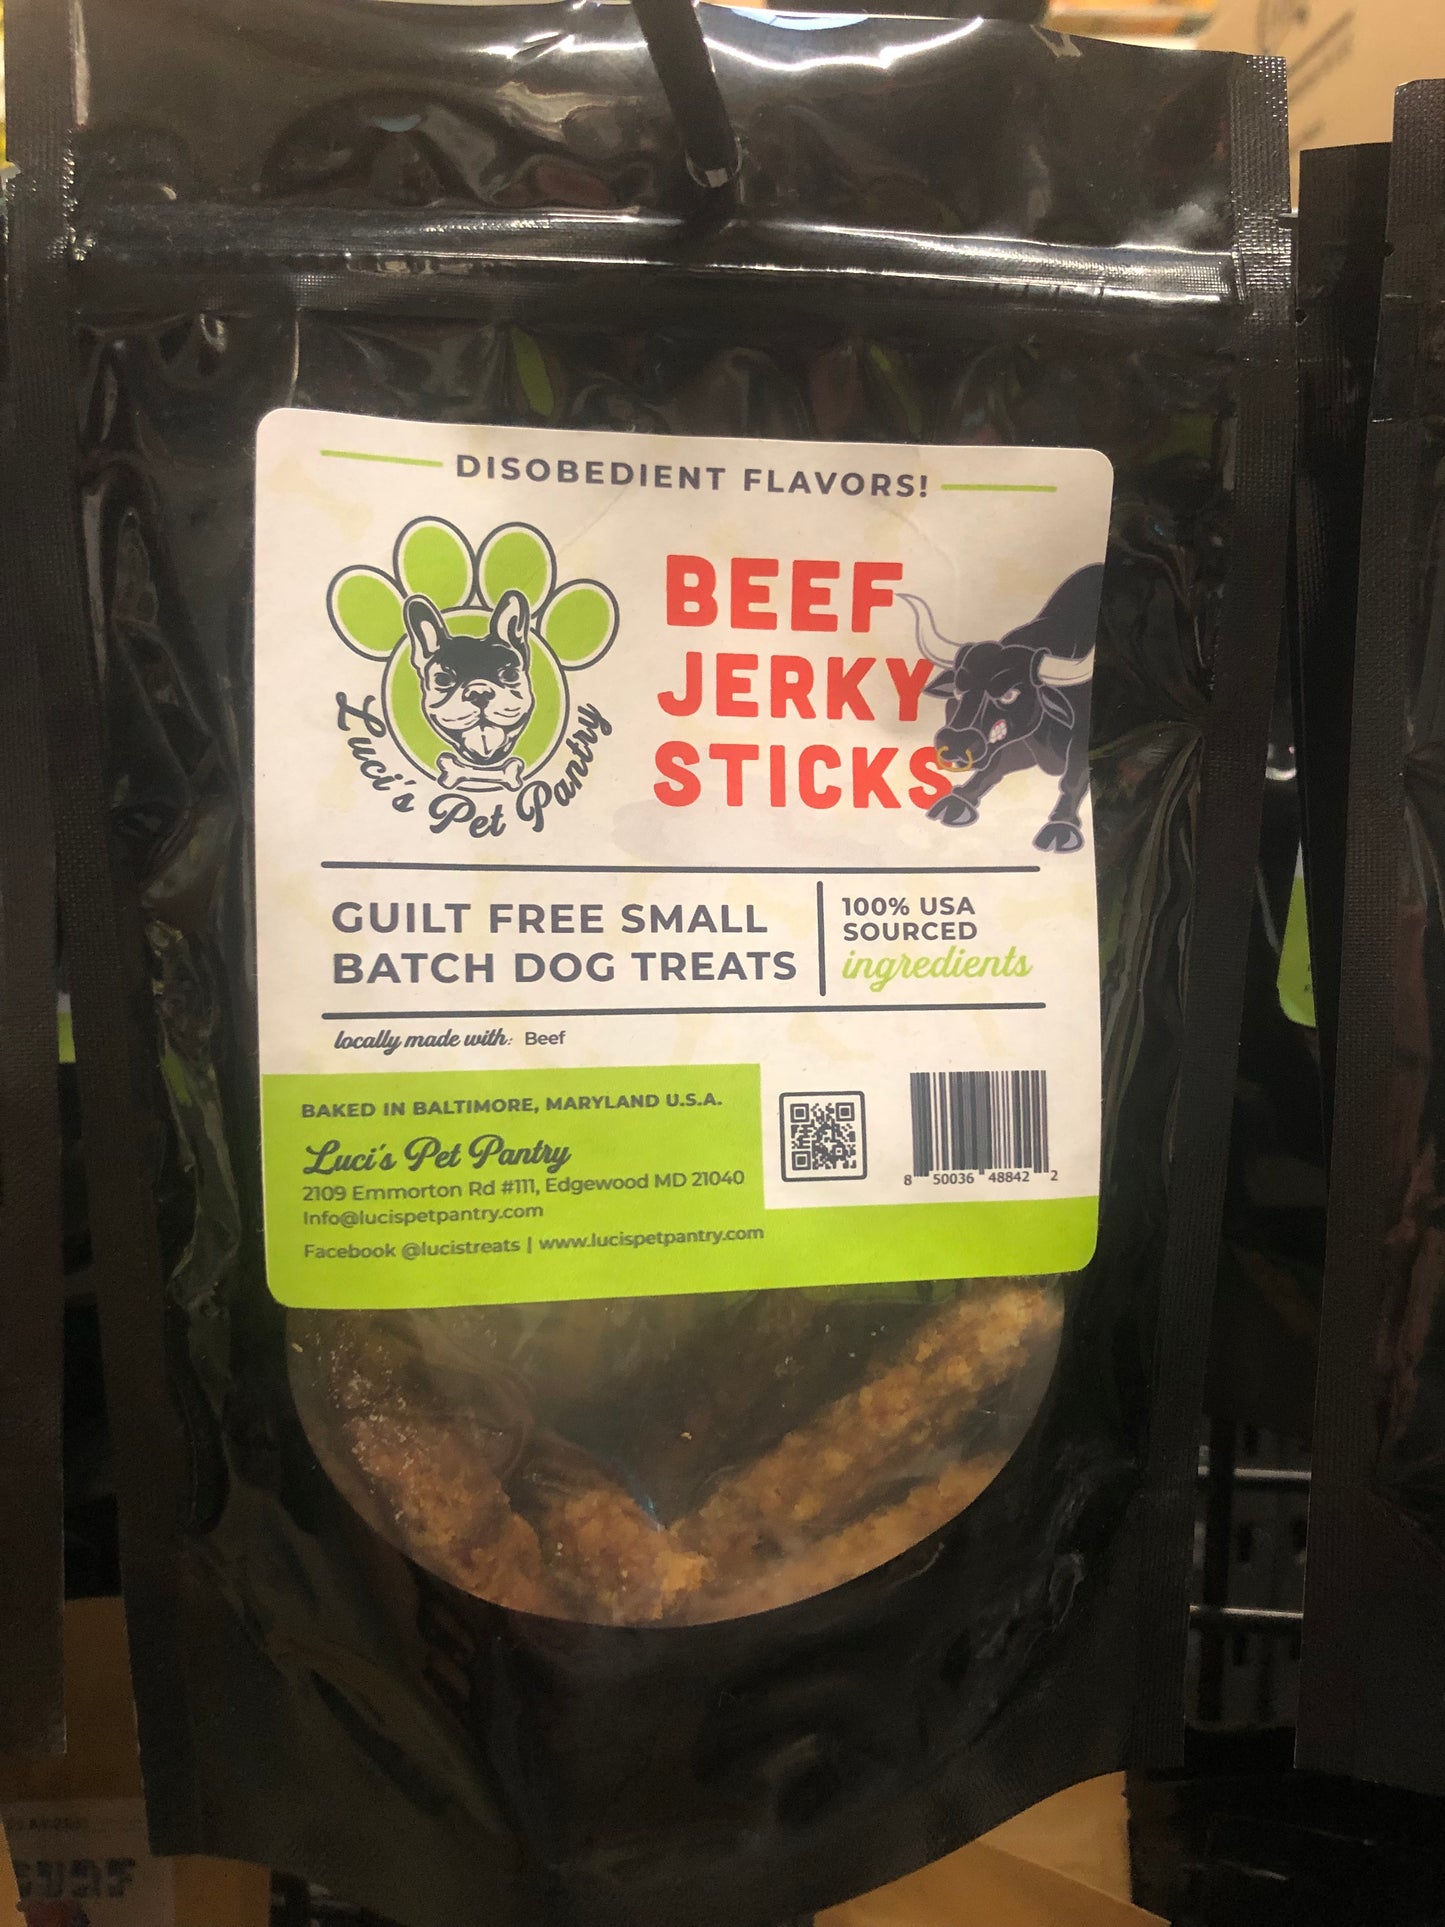 Turkey Sticks - All Natural Single Ingredient Dog & Puppy Jerky Treats - 2 oz. Pouch